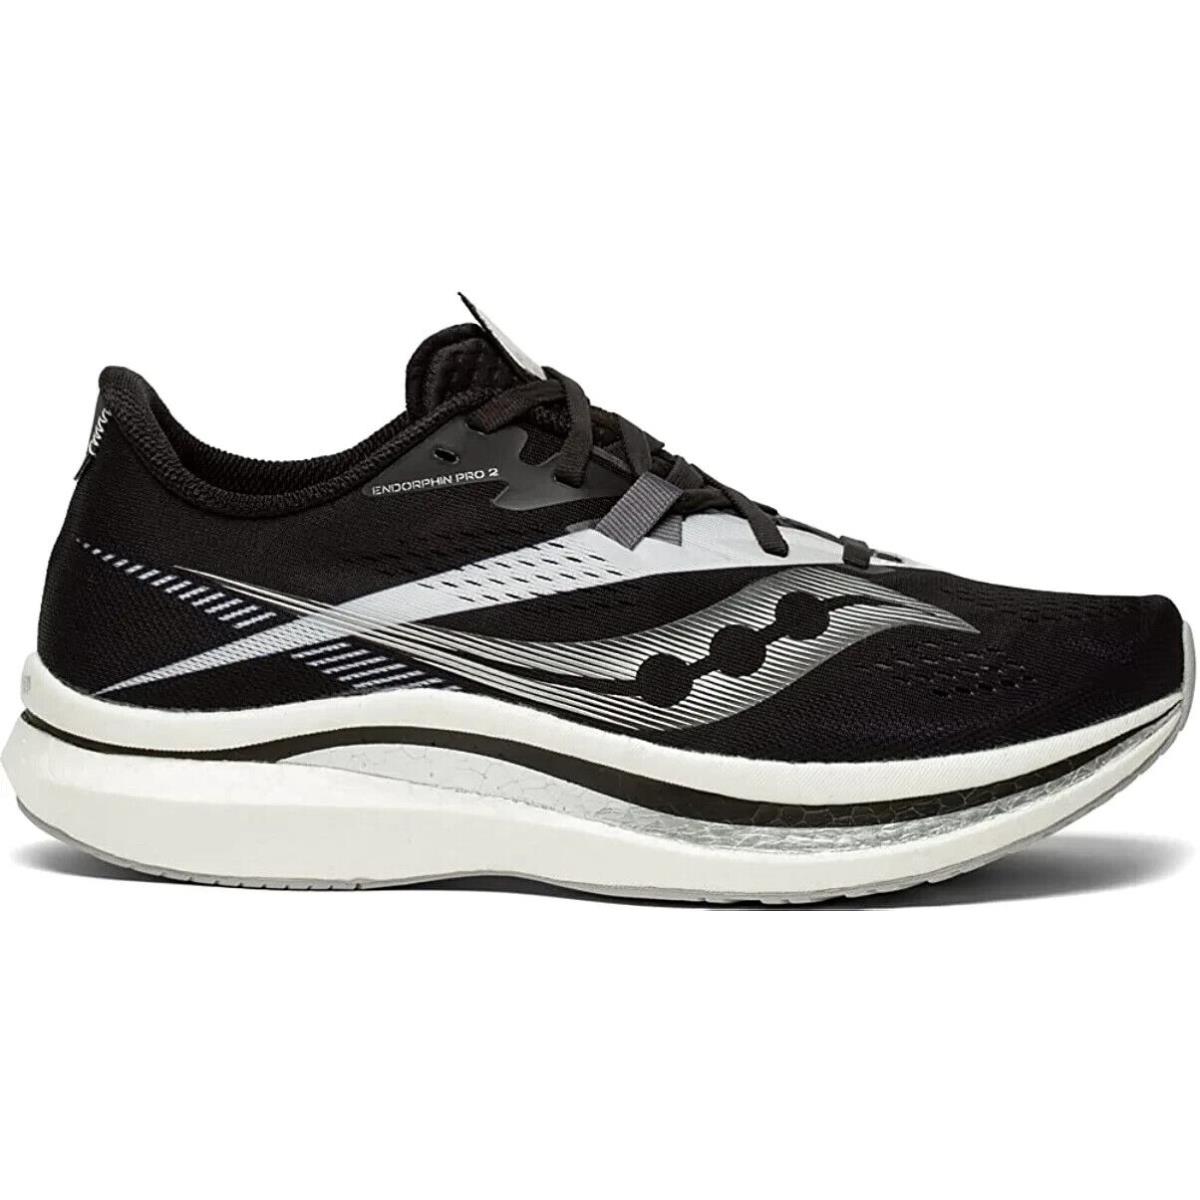 Saucony Men`s S20687-10 Endorphin Pro 2 Running Shoes Black/white 7 M US - Black/White